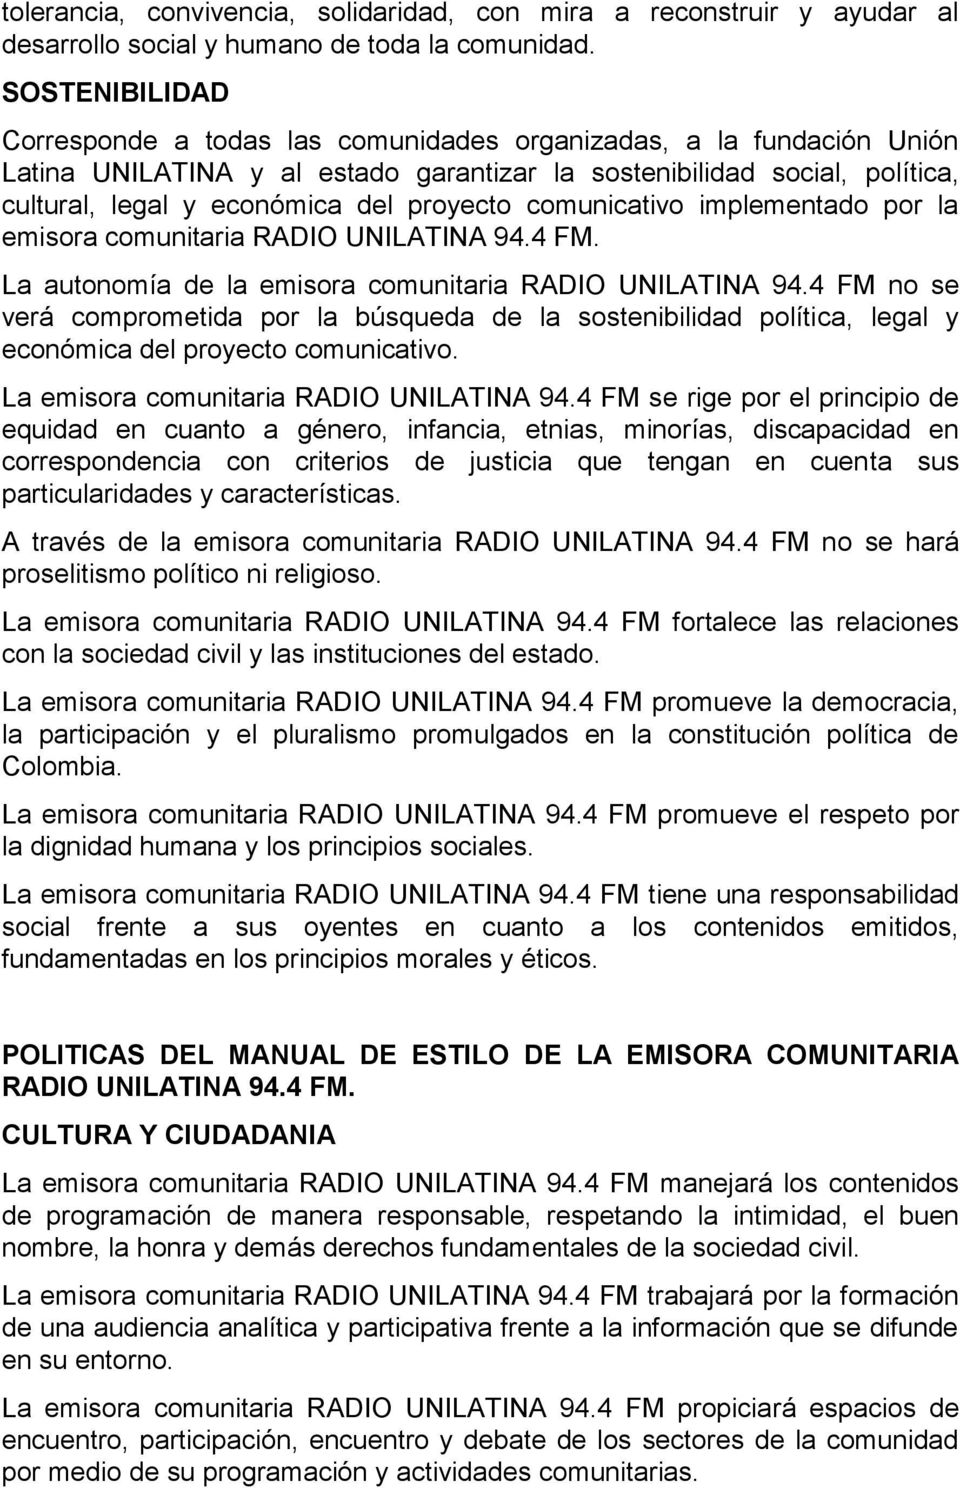 proyecto comunicativo implementado por la emisora comunitaria RADIO UNILATINA 94.4 FM. La autonomía de la emisora comunitaria RADIO UNILATINA 94.